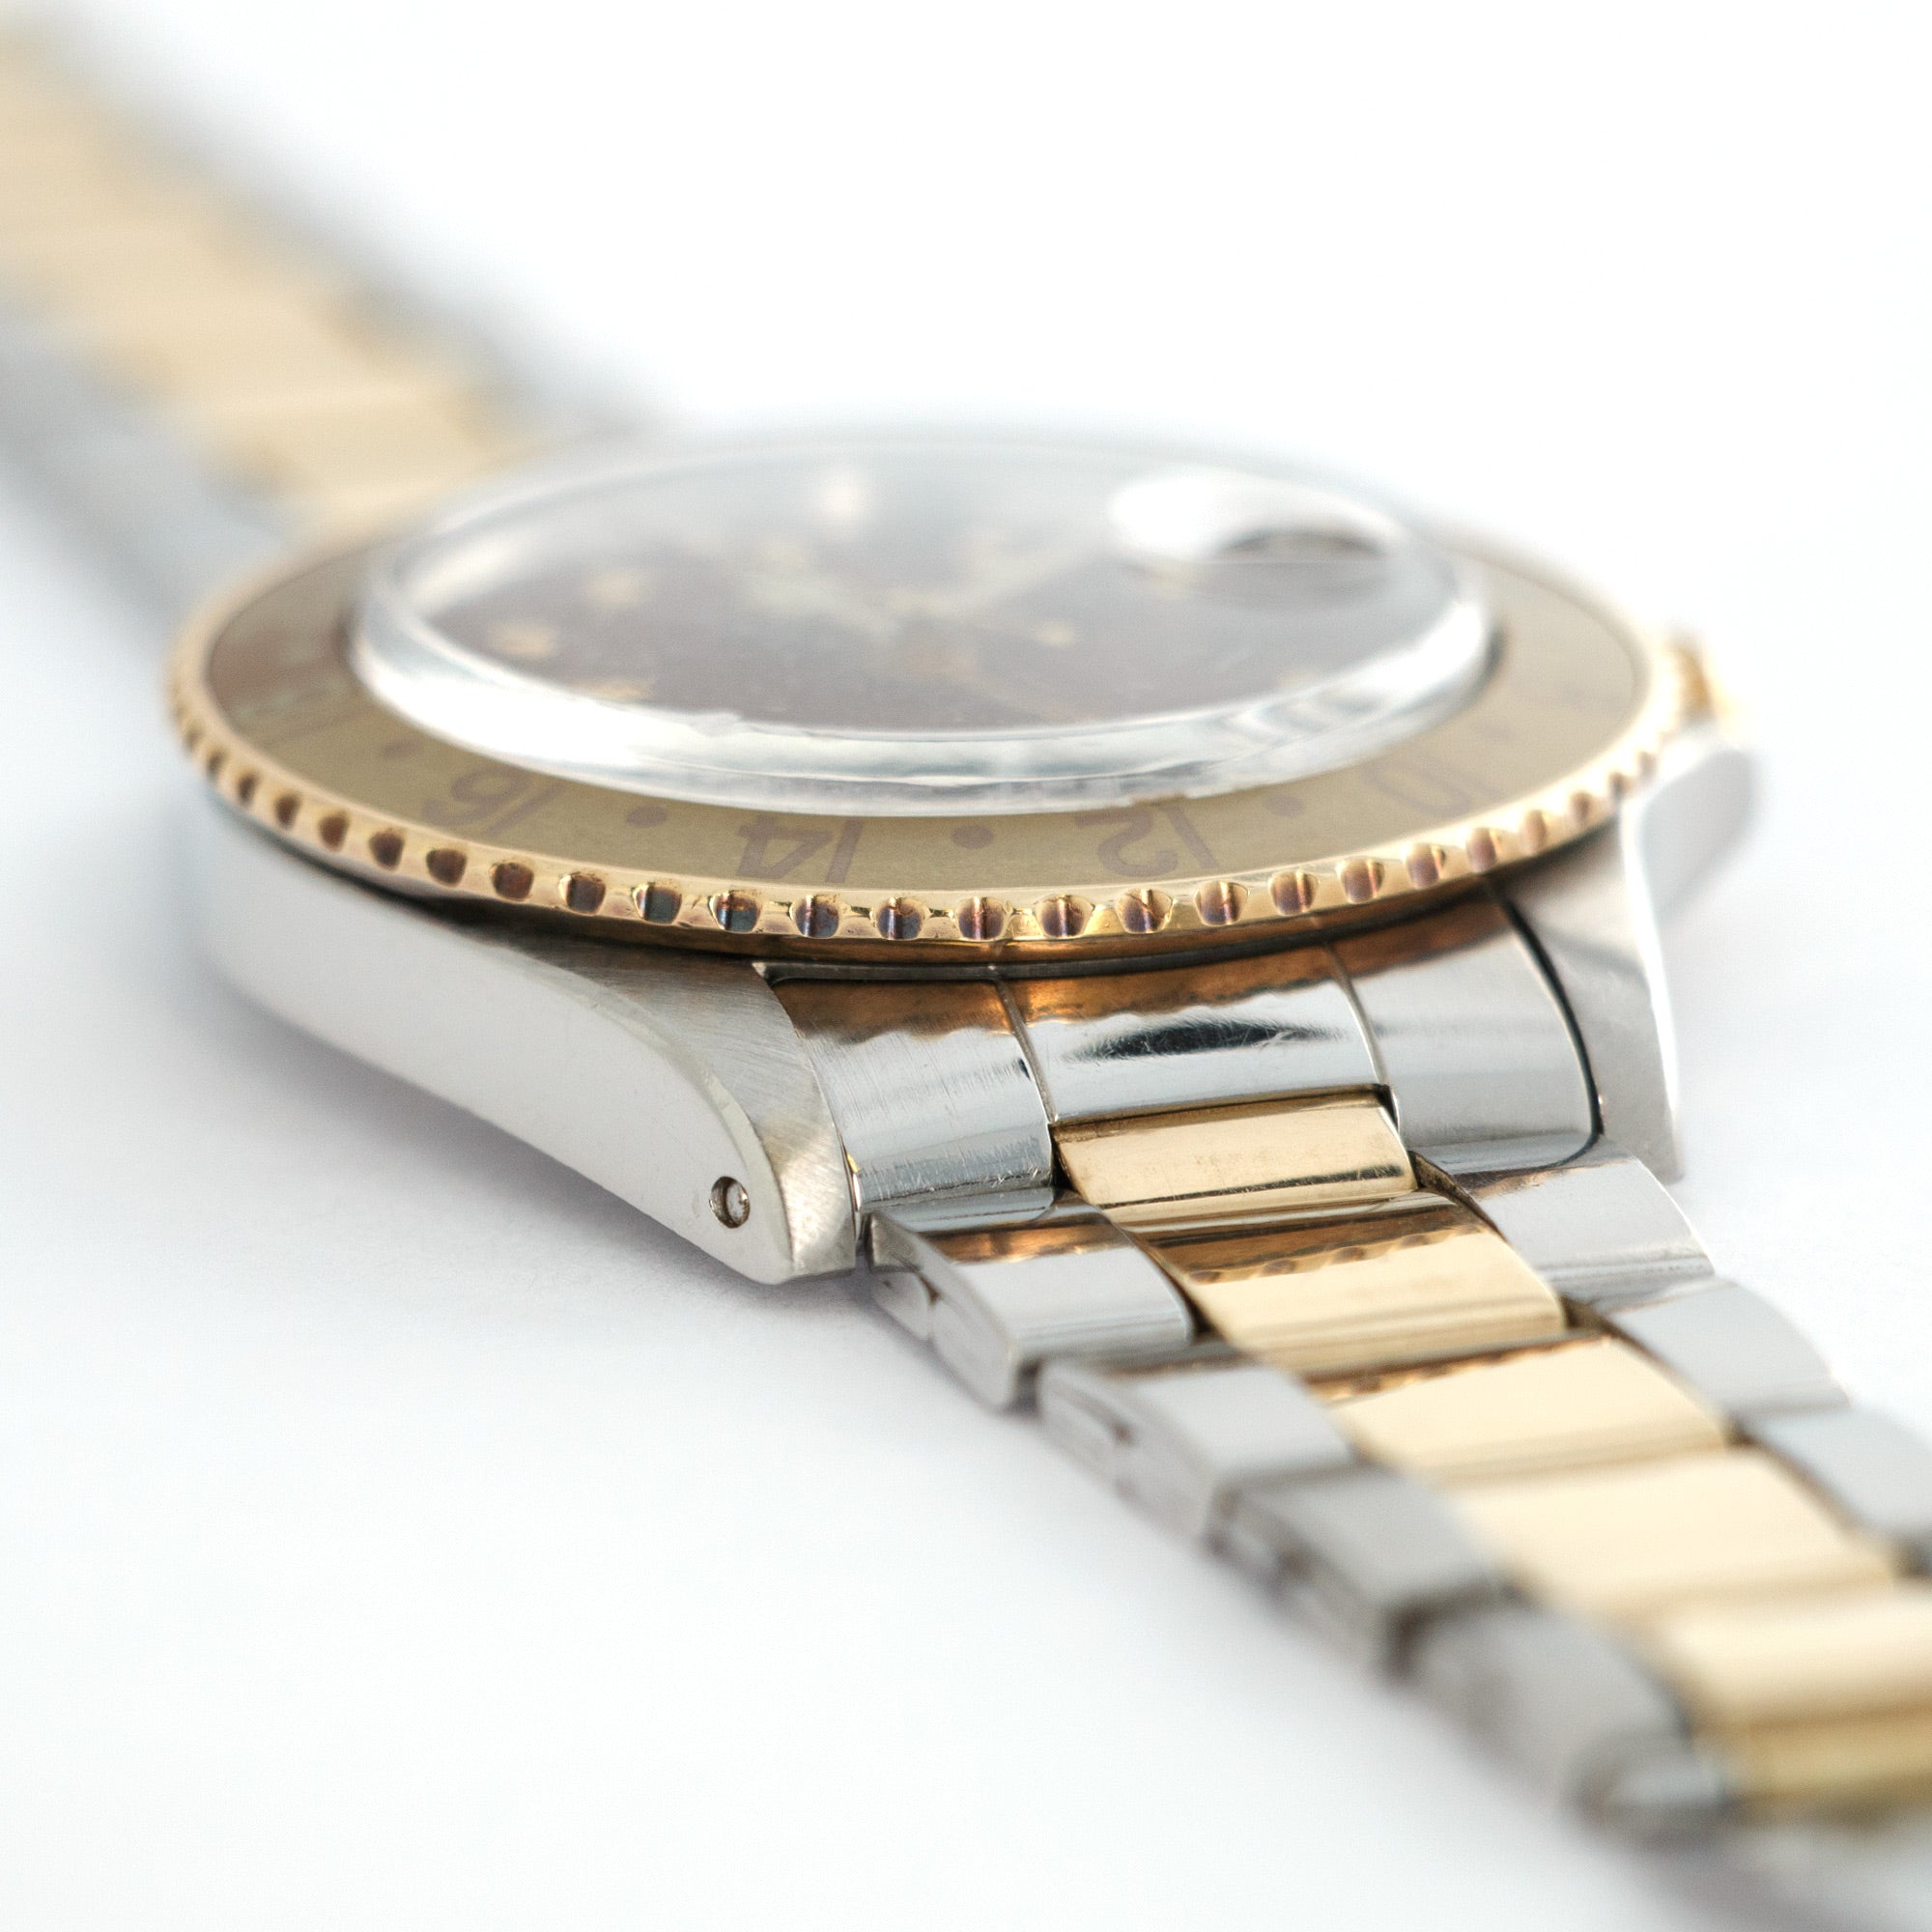 Rolex - Rolex GMT-Master Two Tone Ref. 1675, 1971 - The Keystone Watches